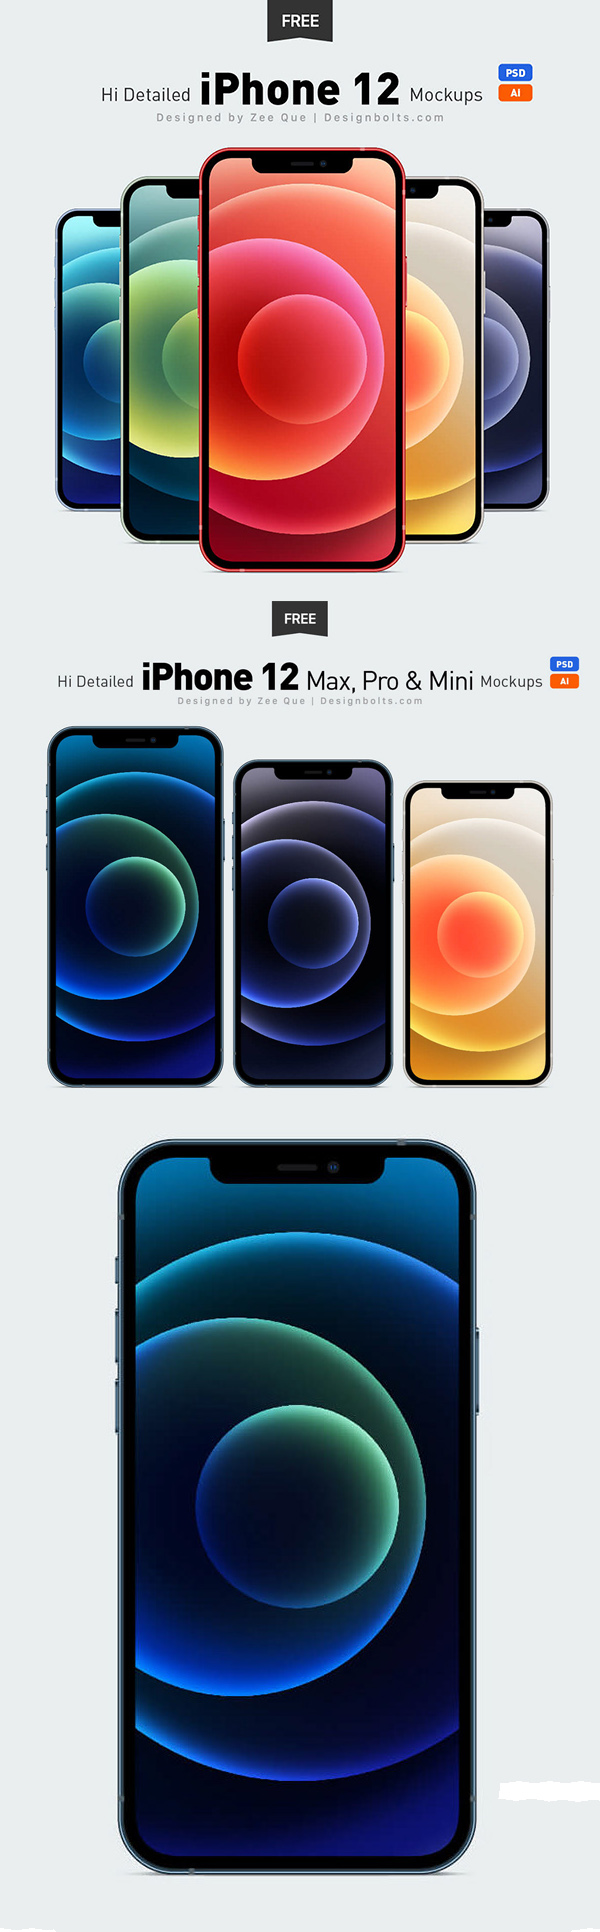 Free iPhone 12, iPhone 12 Pro & Max Ai & Mockup PSD Set